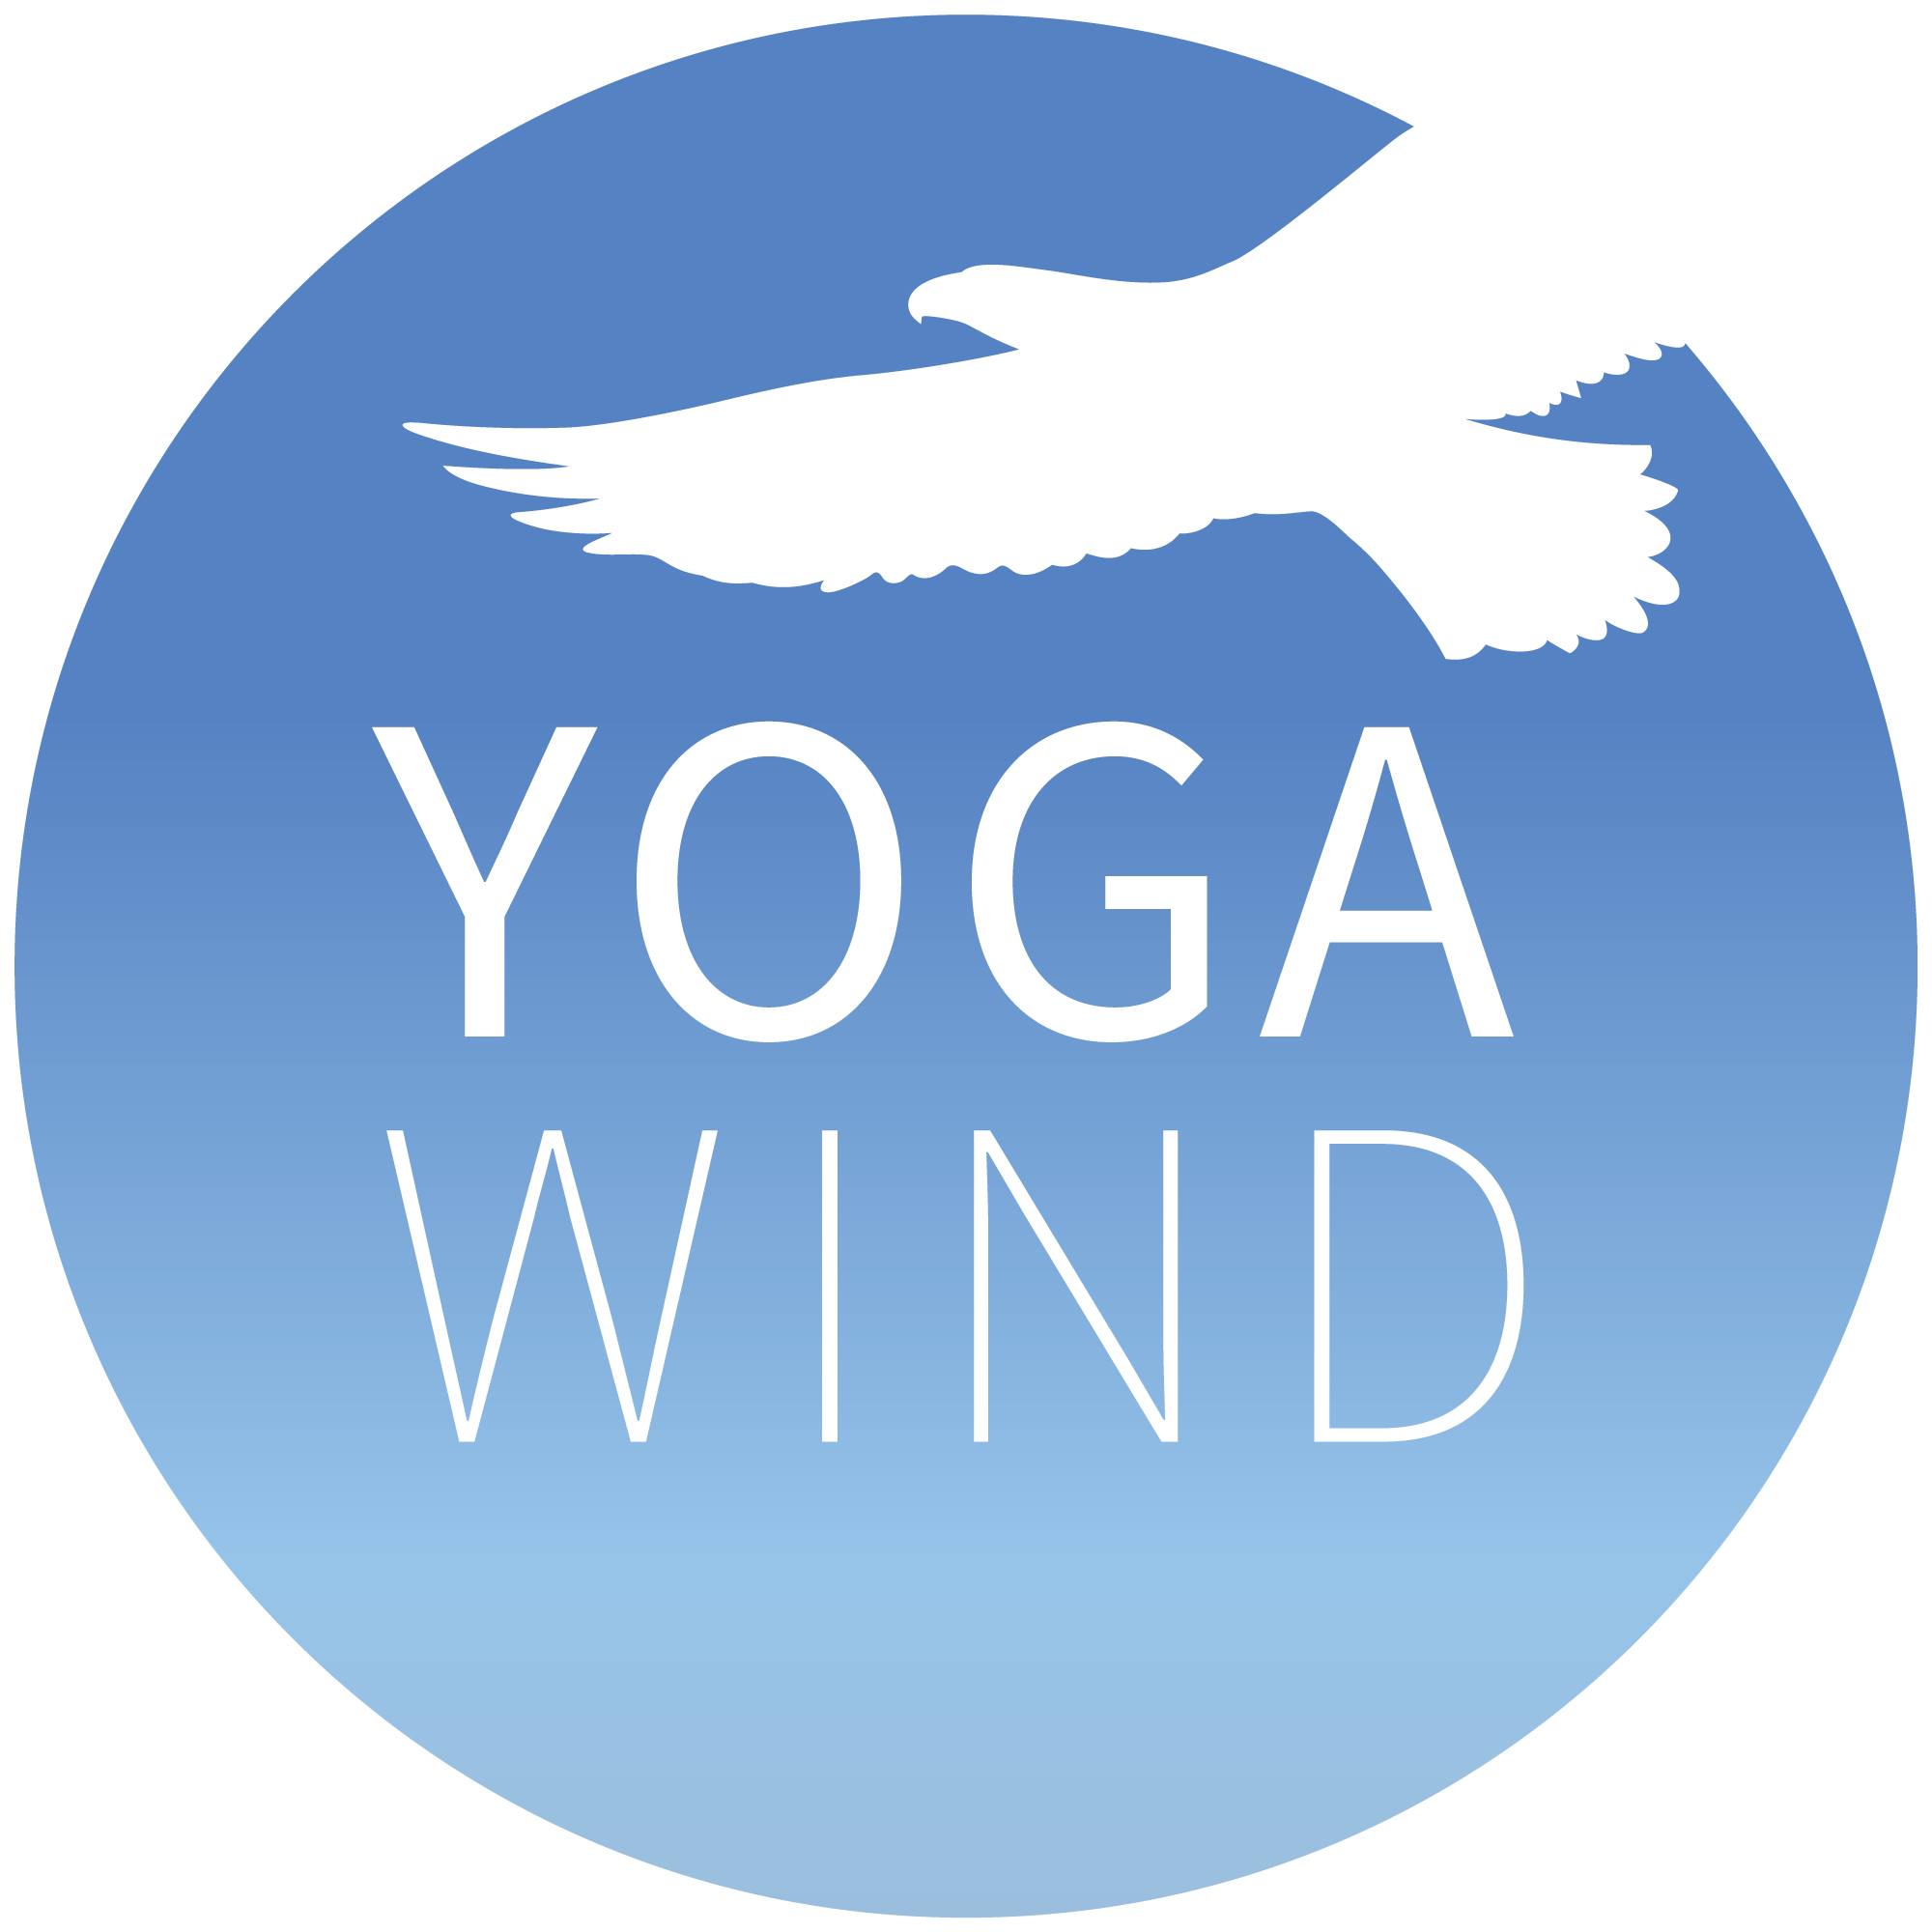 Yoga Wind